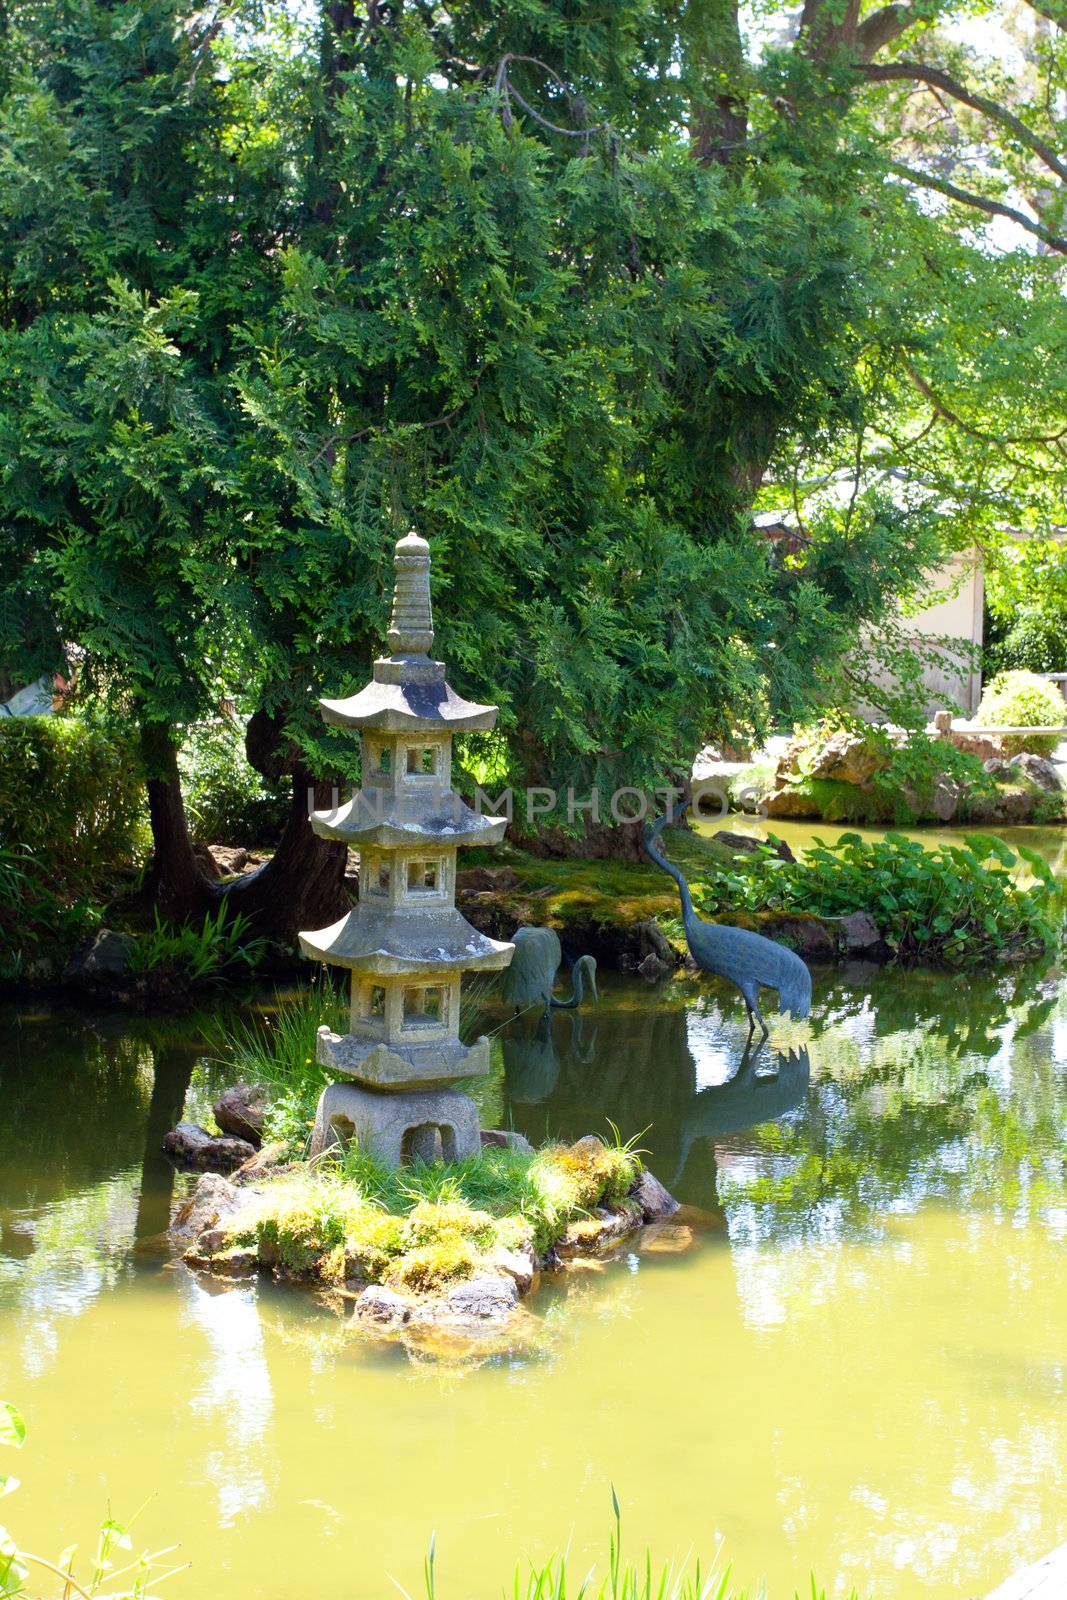 Peaceful Garden by joshuaraineyphotography